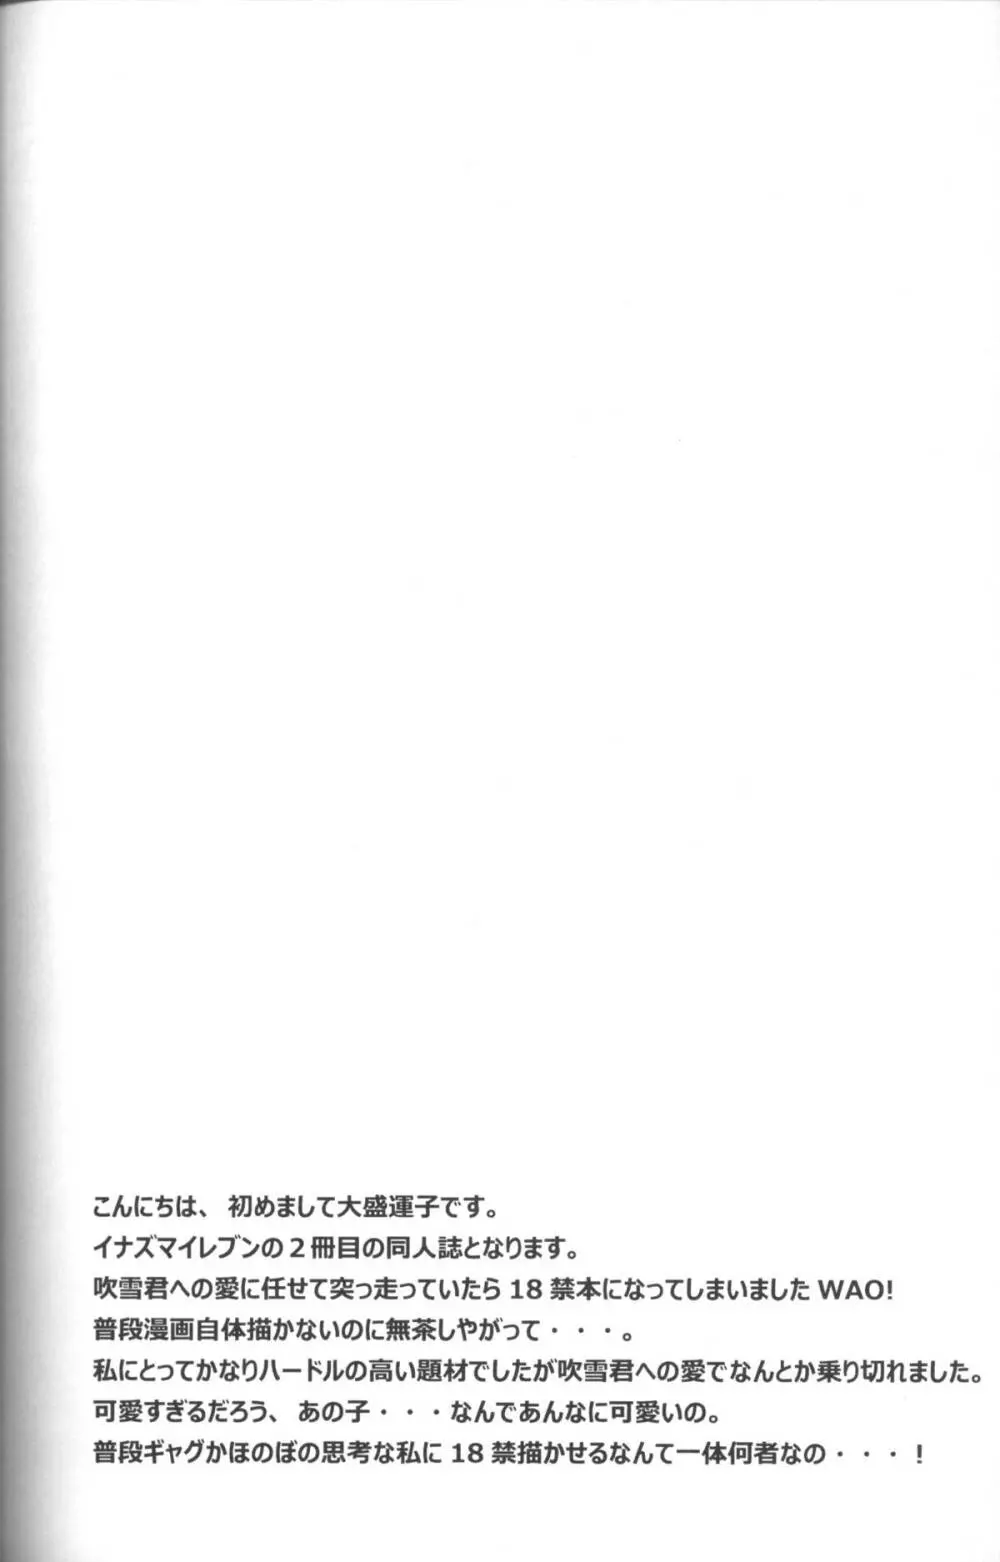 Ookami san ga yatte kita - page3